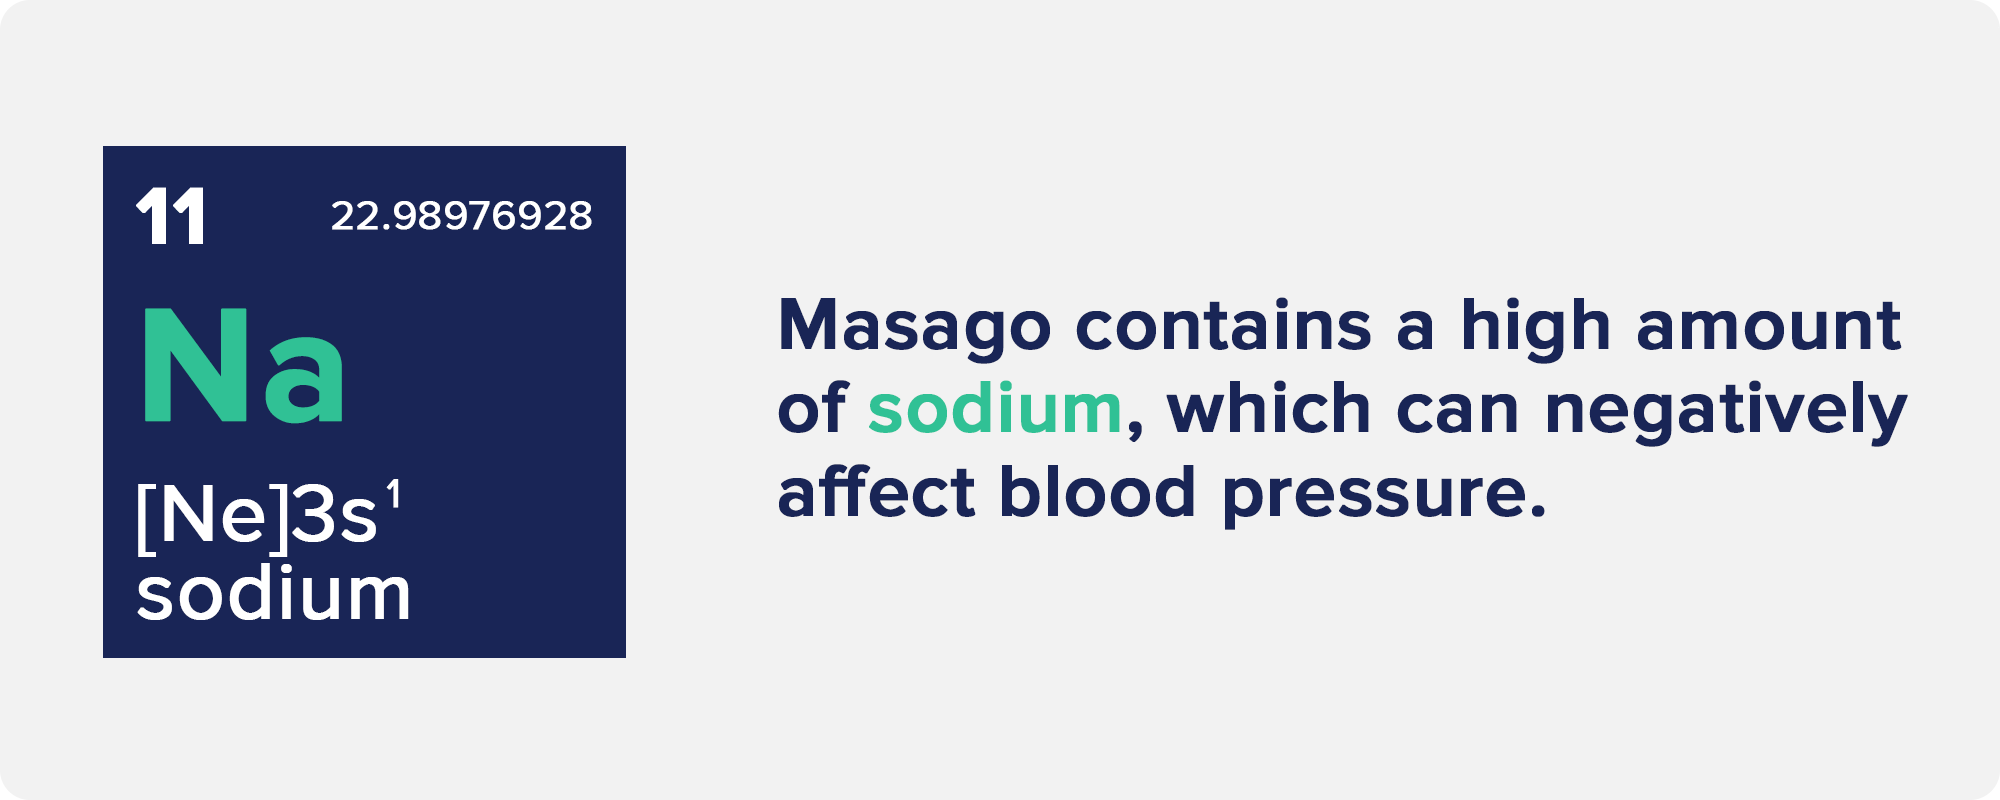 Masago contains a high amount of sodium